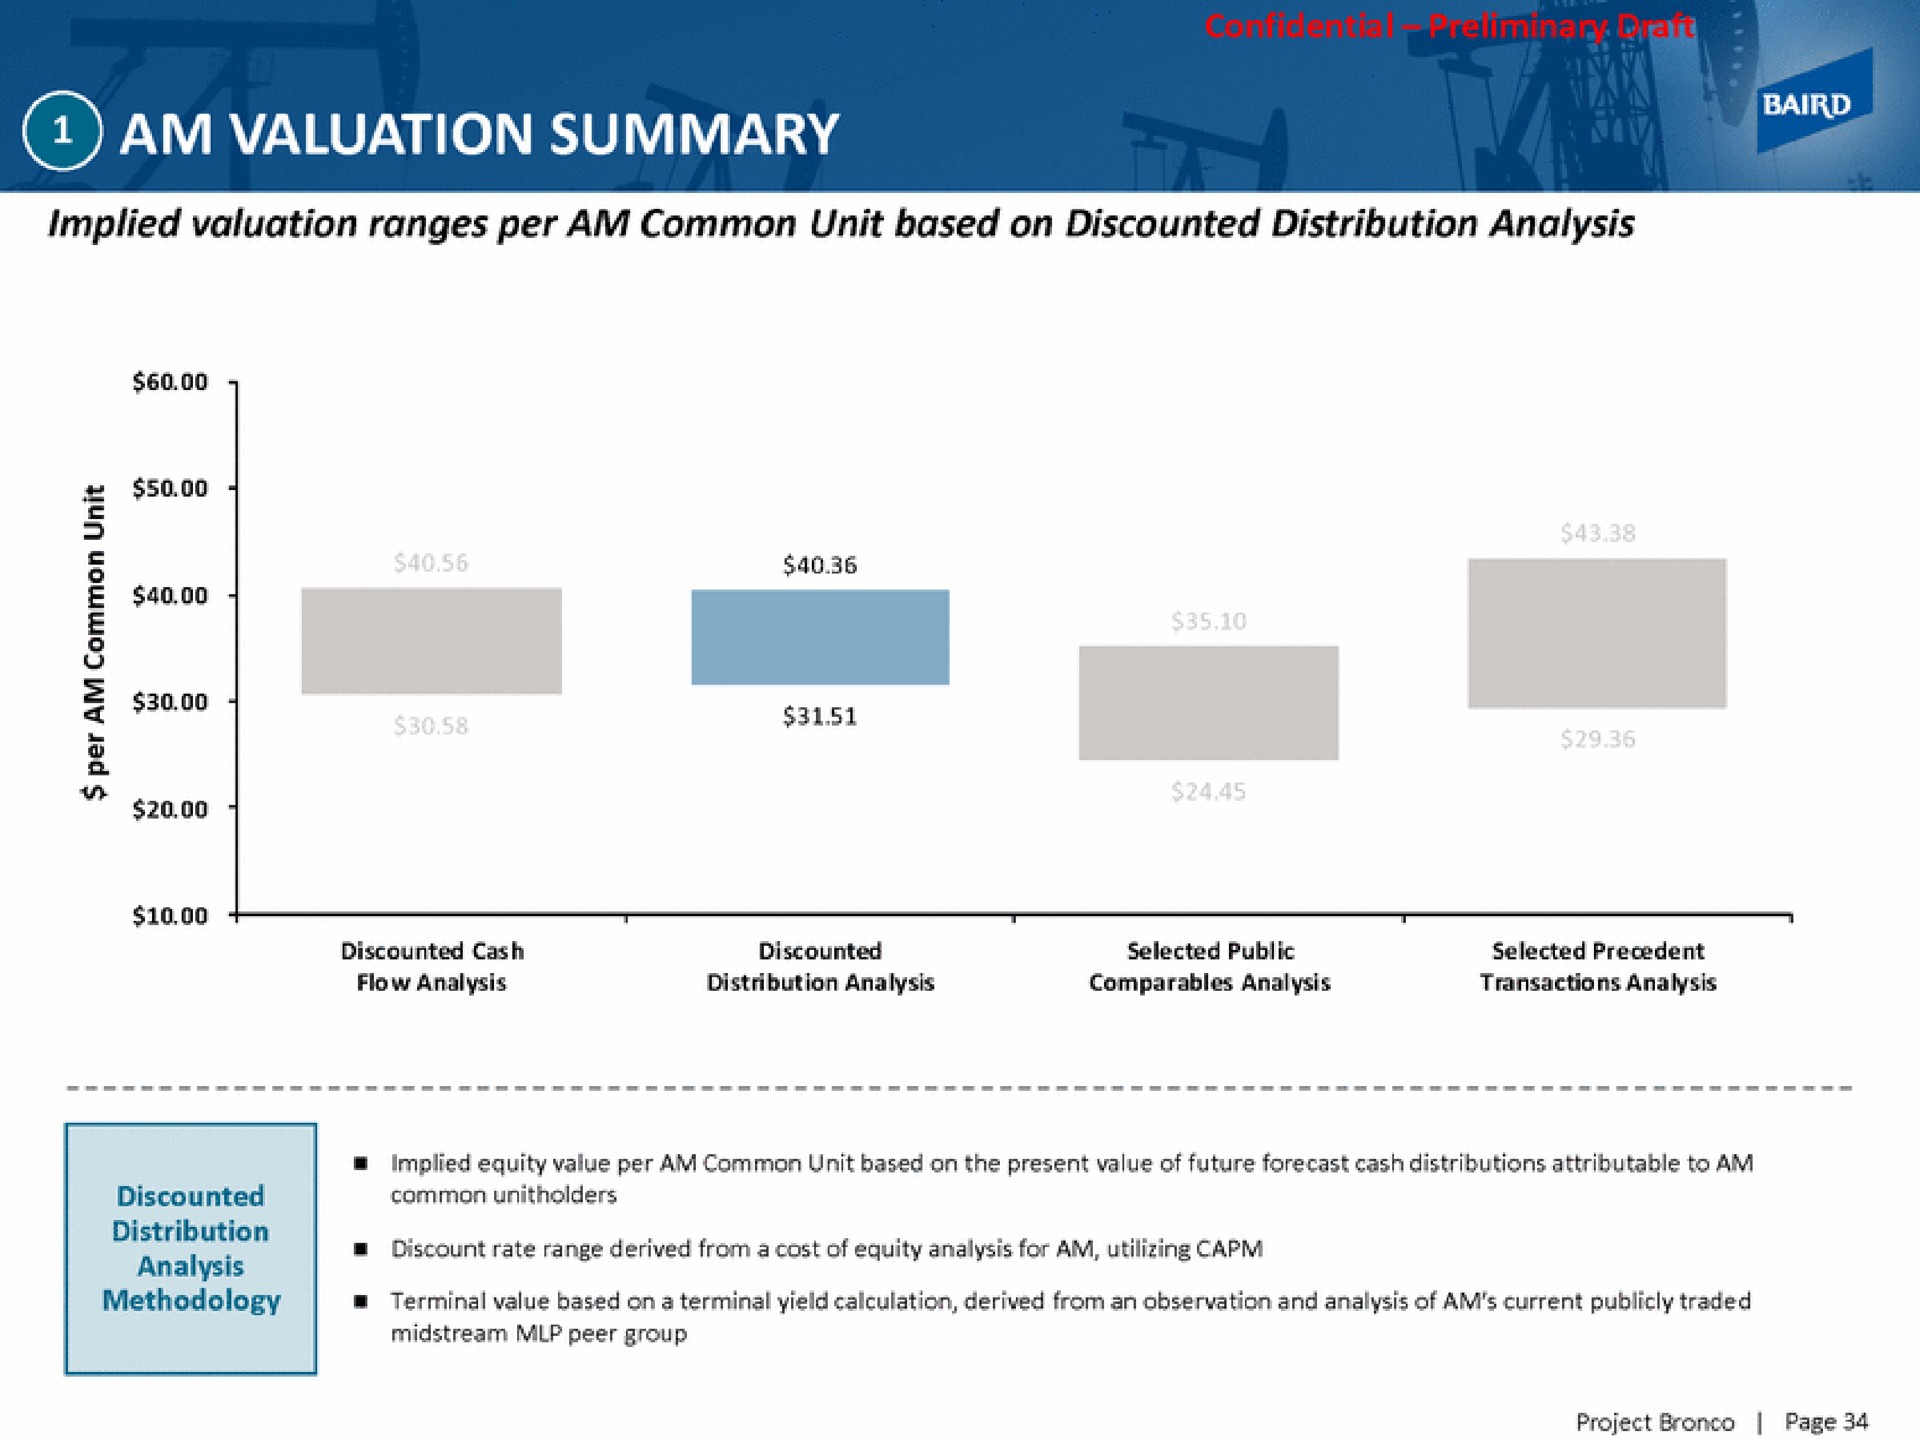 am valuation summary | Baird